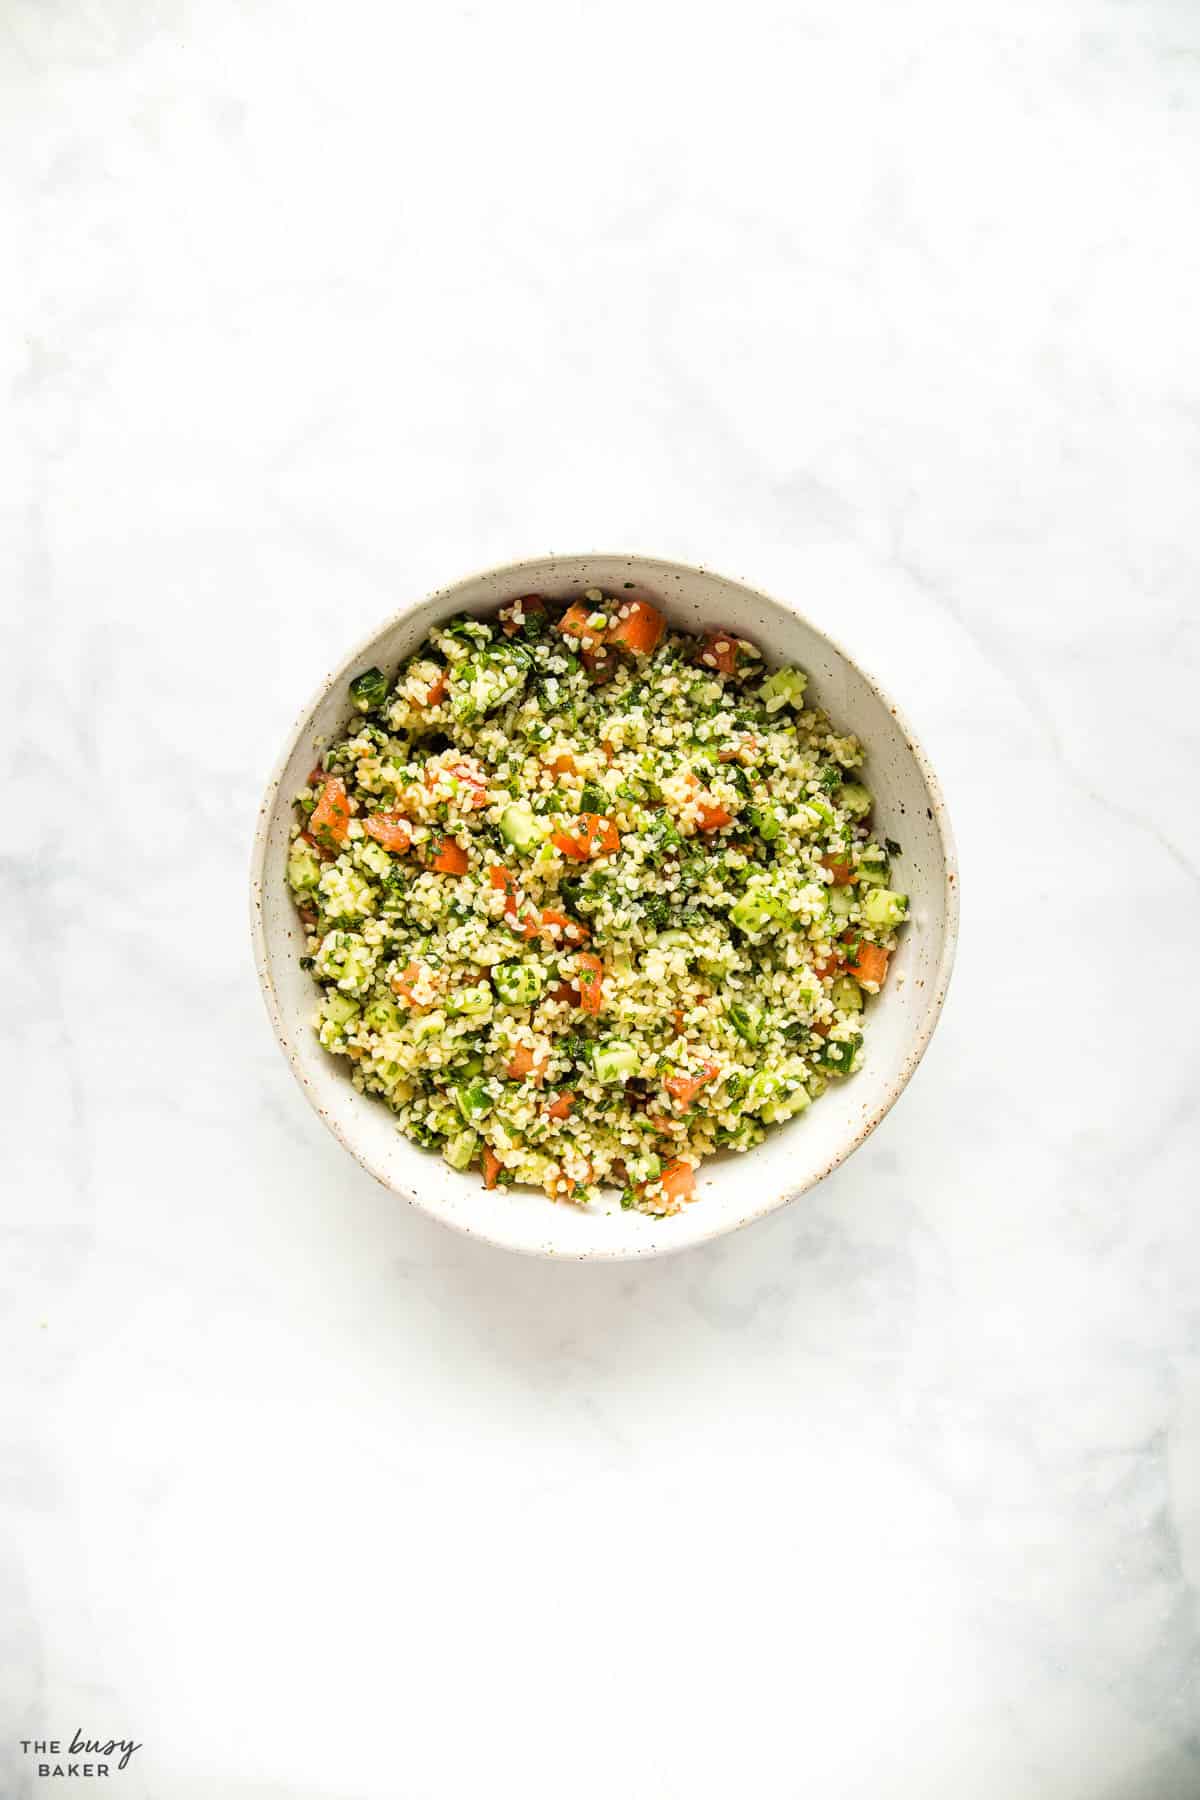 salad in a ceramic bowl with bulgur, veggies, and fresh herbs